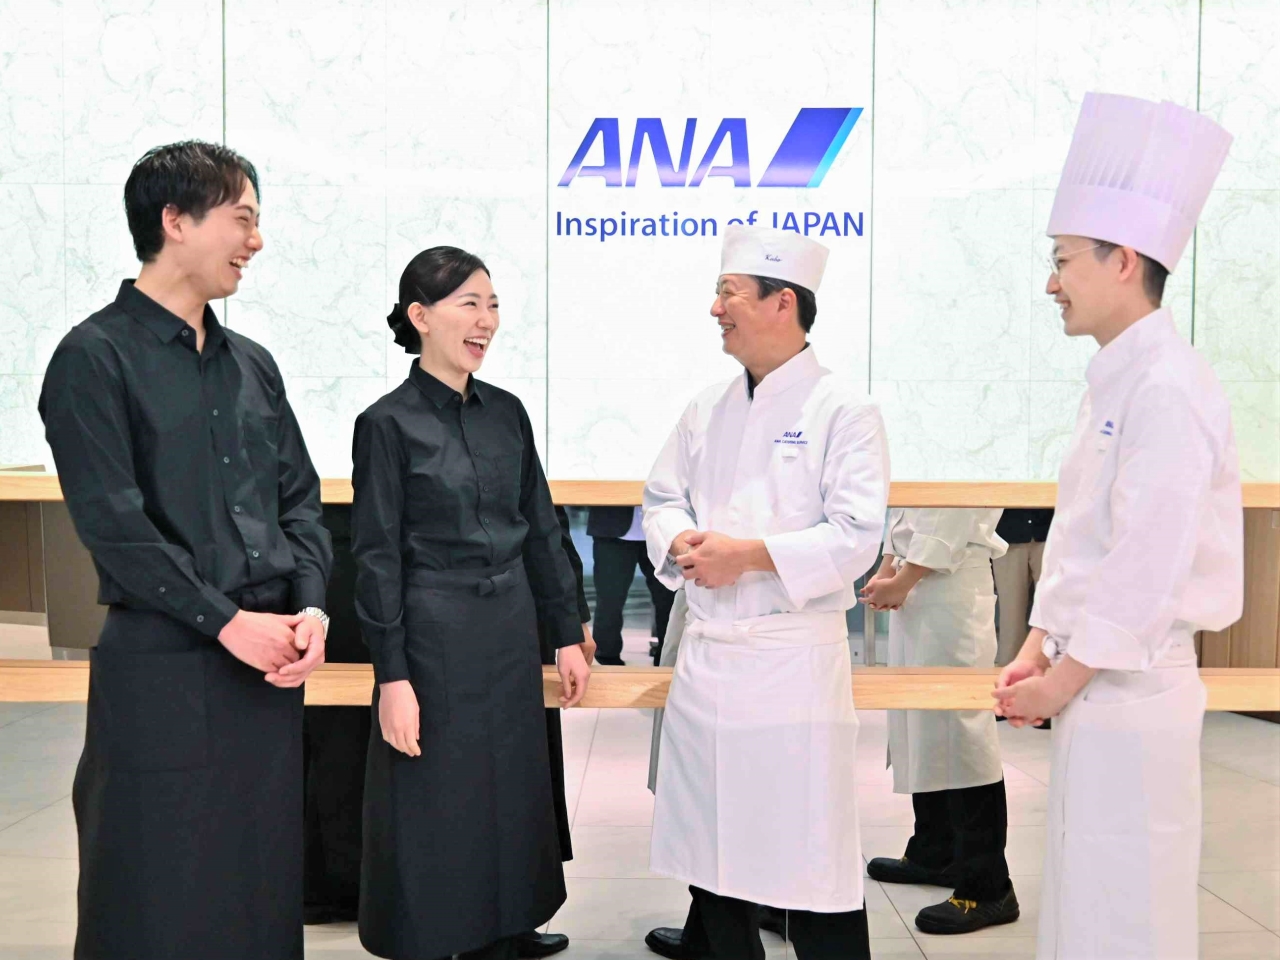 ANAグループの一員として空港内ラウンジでの食事・サービスの提供や、機内食の調理をおこなっています